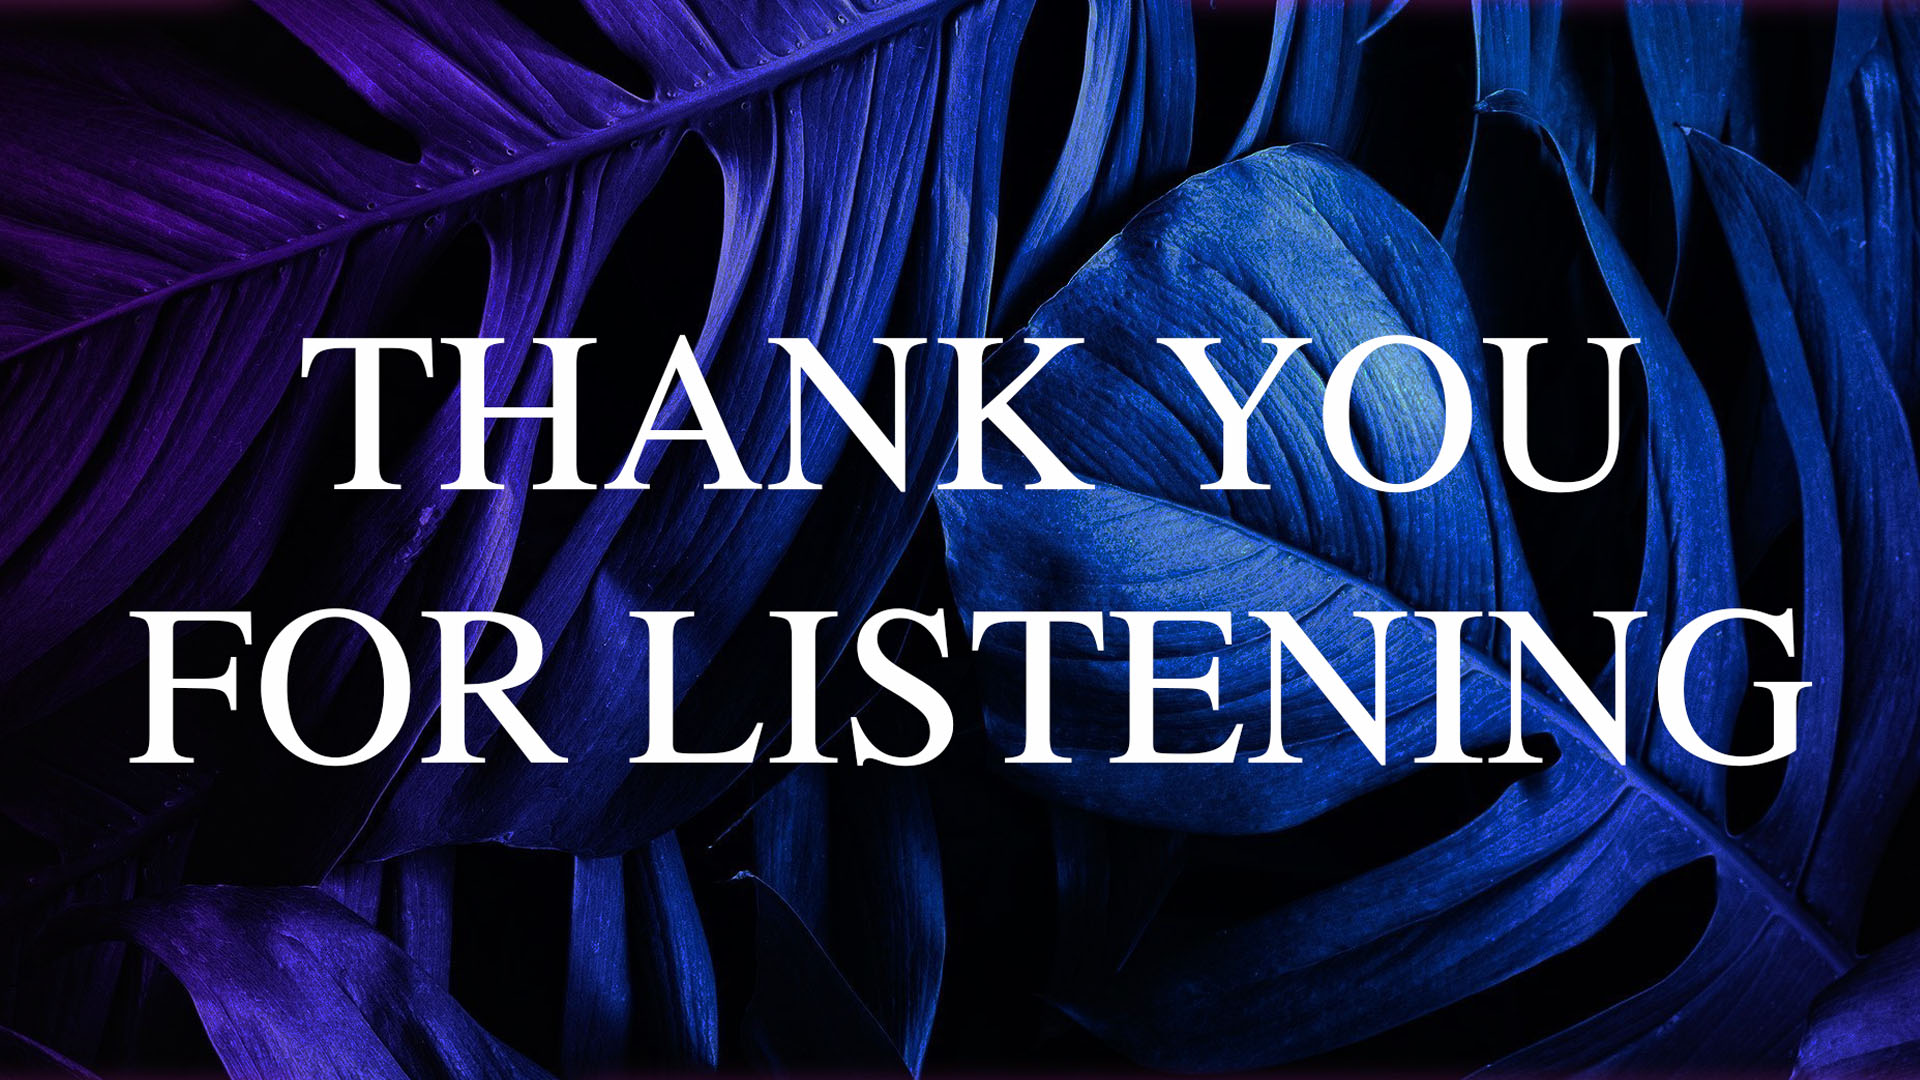 presentation thanks for listening